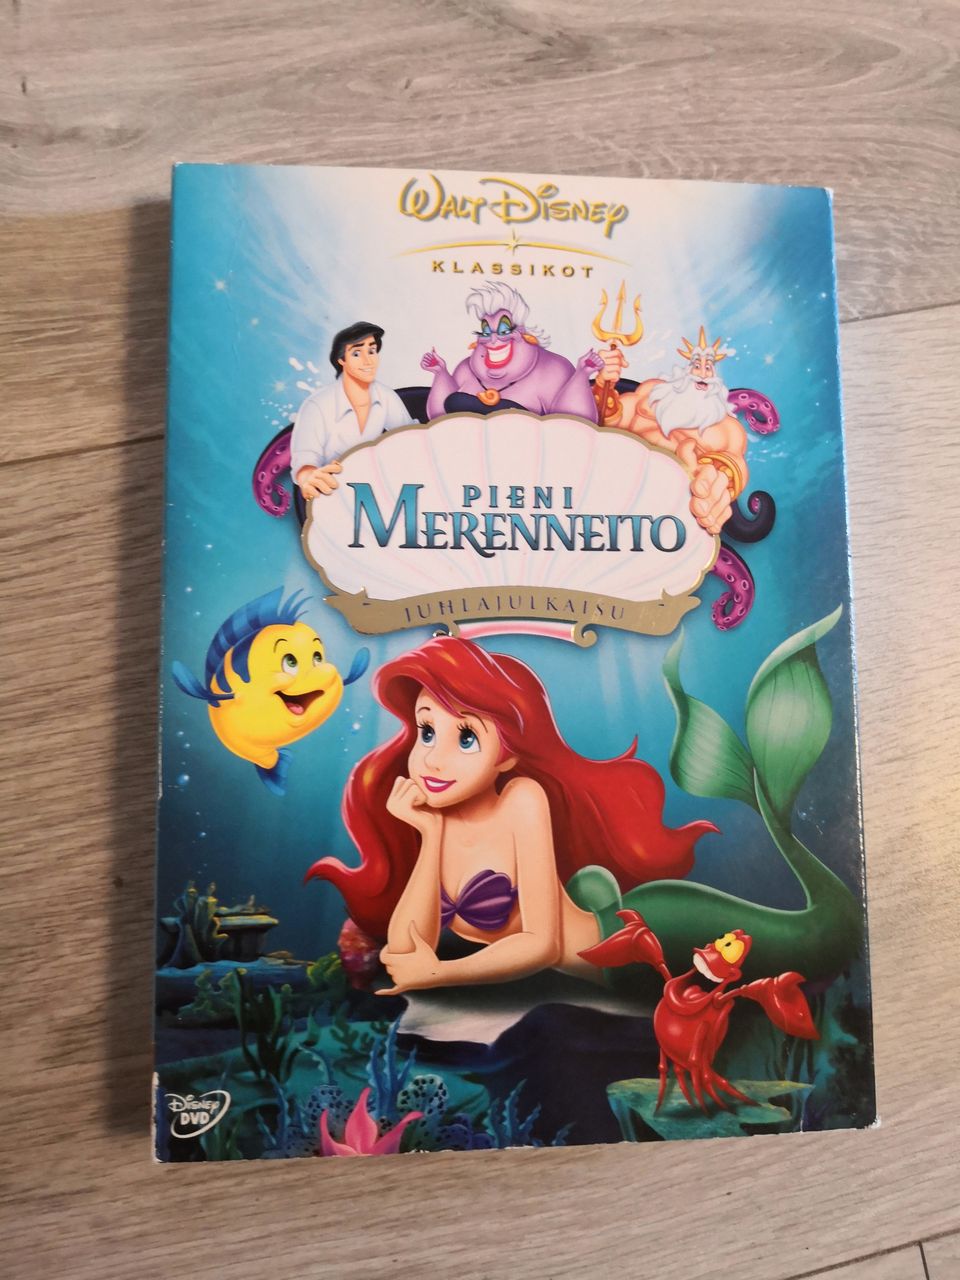 Disneyn Pieni Merenneito Juhlajulkaisu DVD